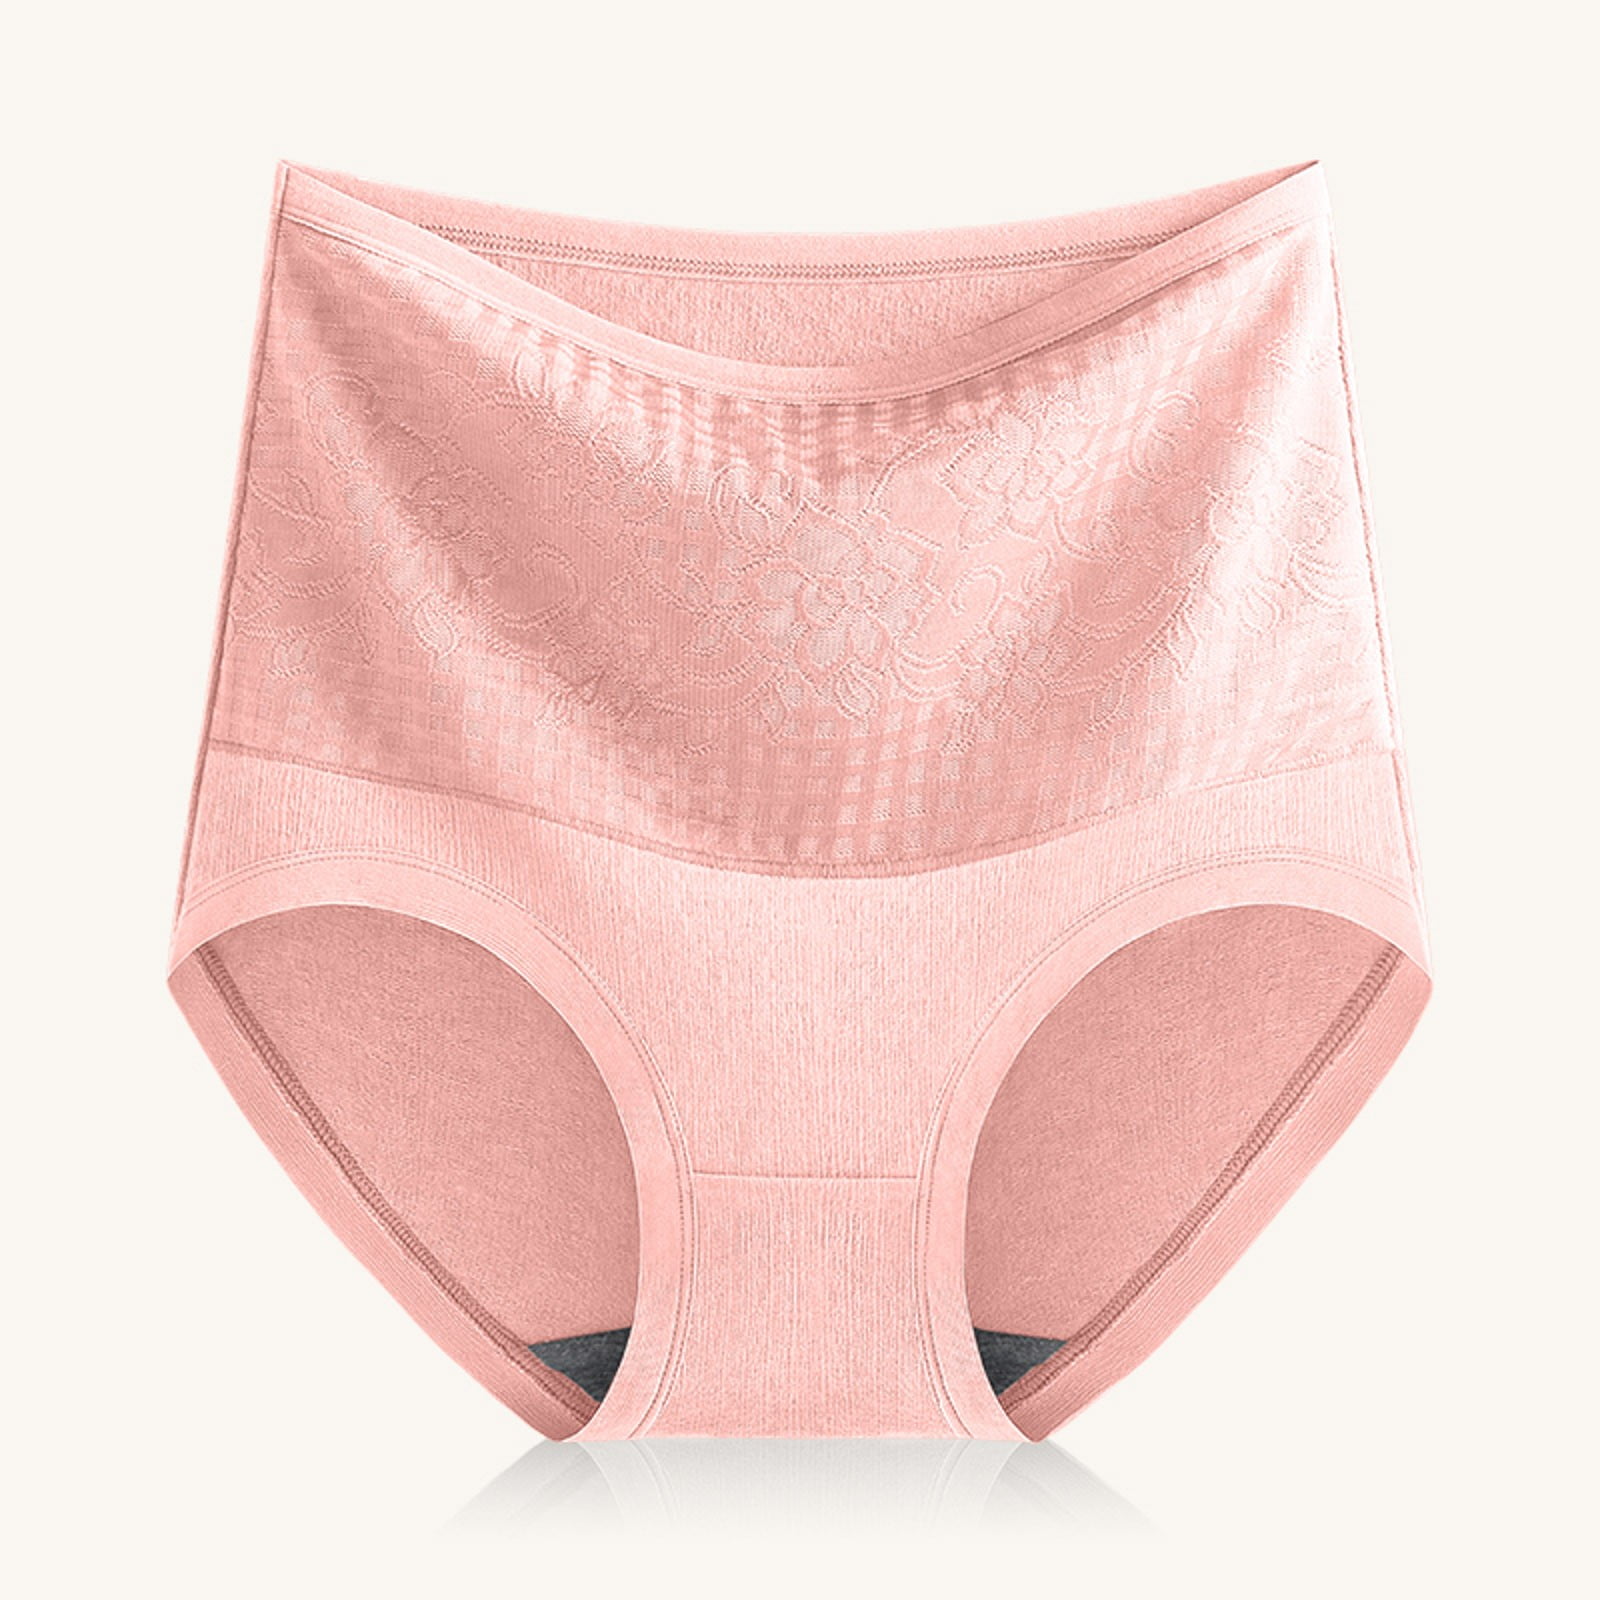 Aayomet Women Panties Lace Women G String Lace Thongs T Back Panties Thong  Female Underwear Fashion Letter Panty Girls Underwear,Pink L 